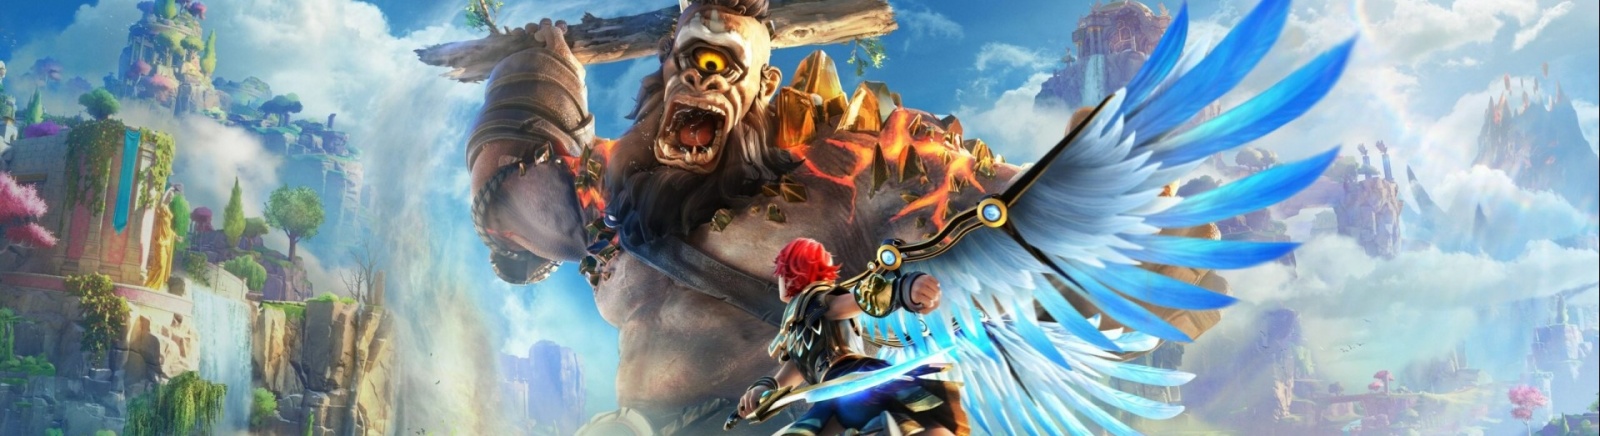 Дата выхода Immortals Fenyx Rising (Gods and Monsters)  на PC, PS5 и Xbox Series X/S в России и во всем мире